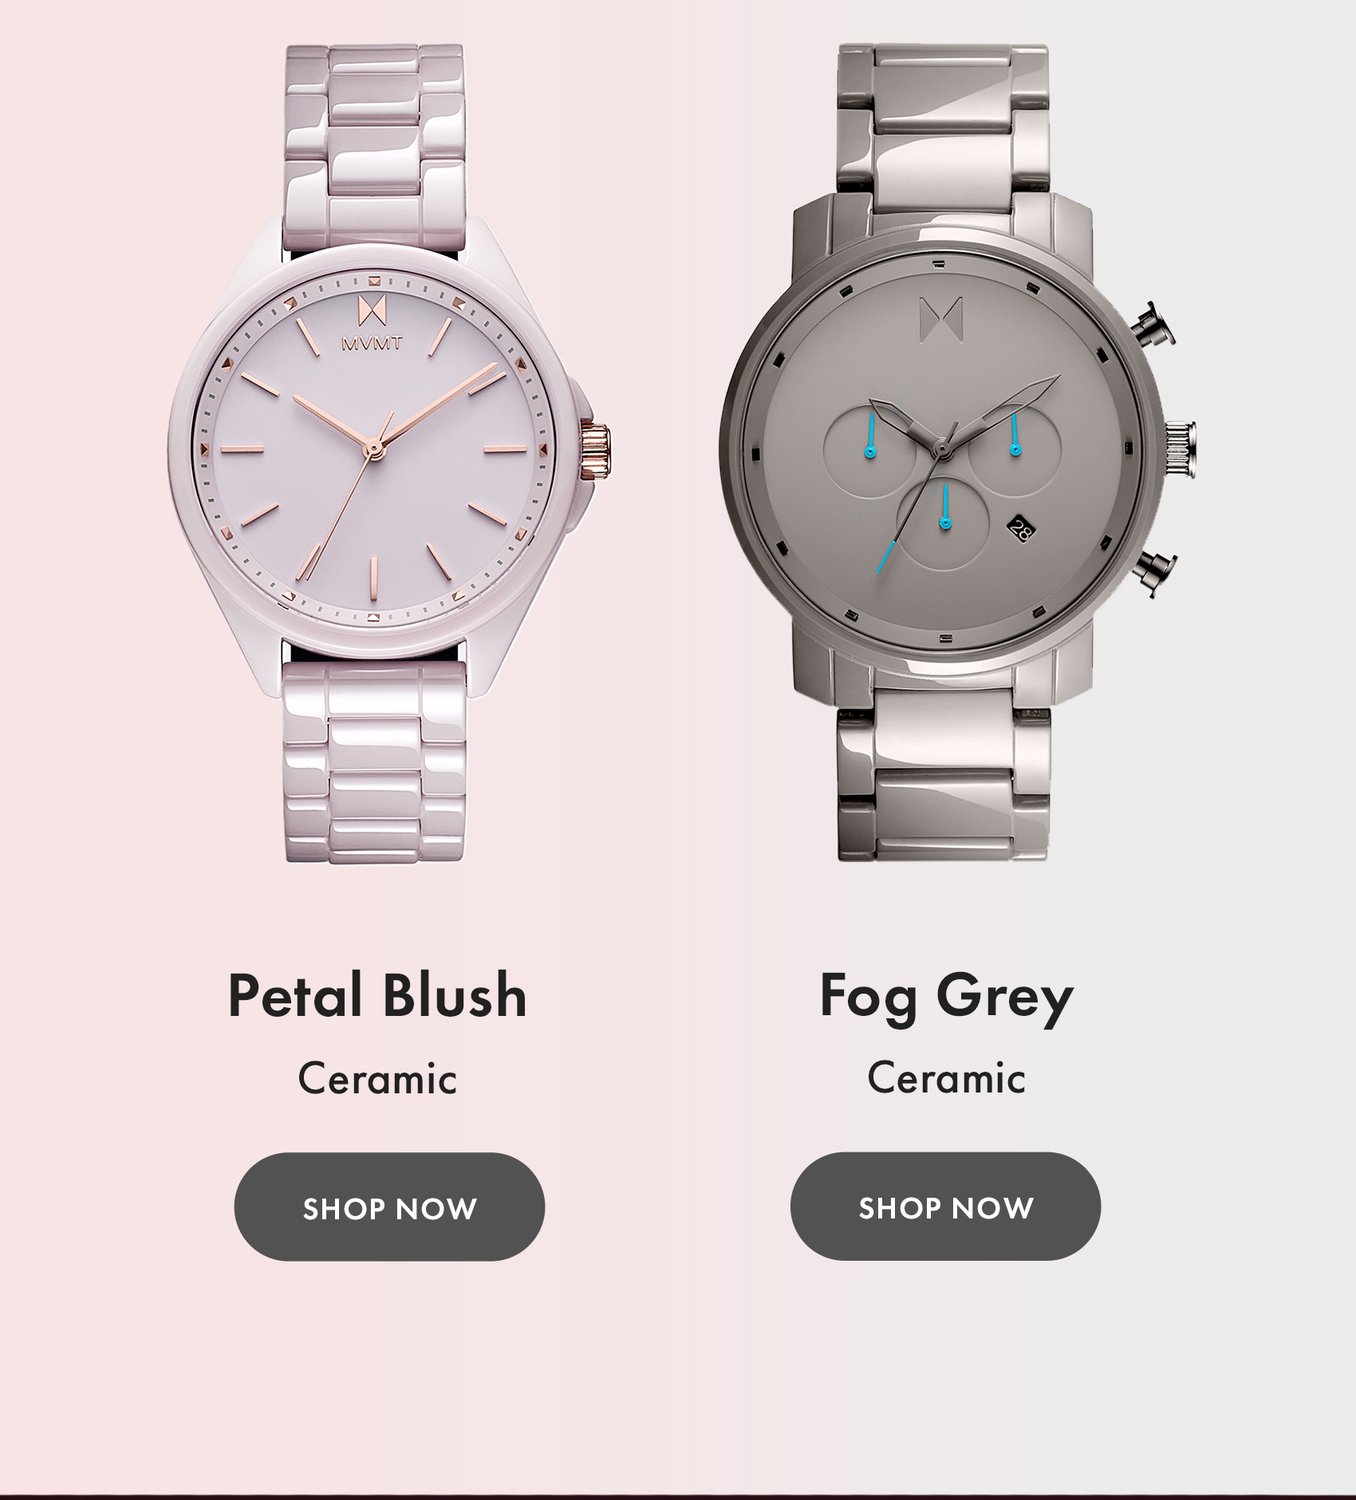 MVMT petal blush and fog grey ceramic watches